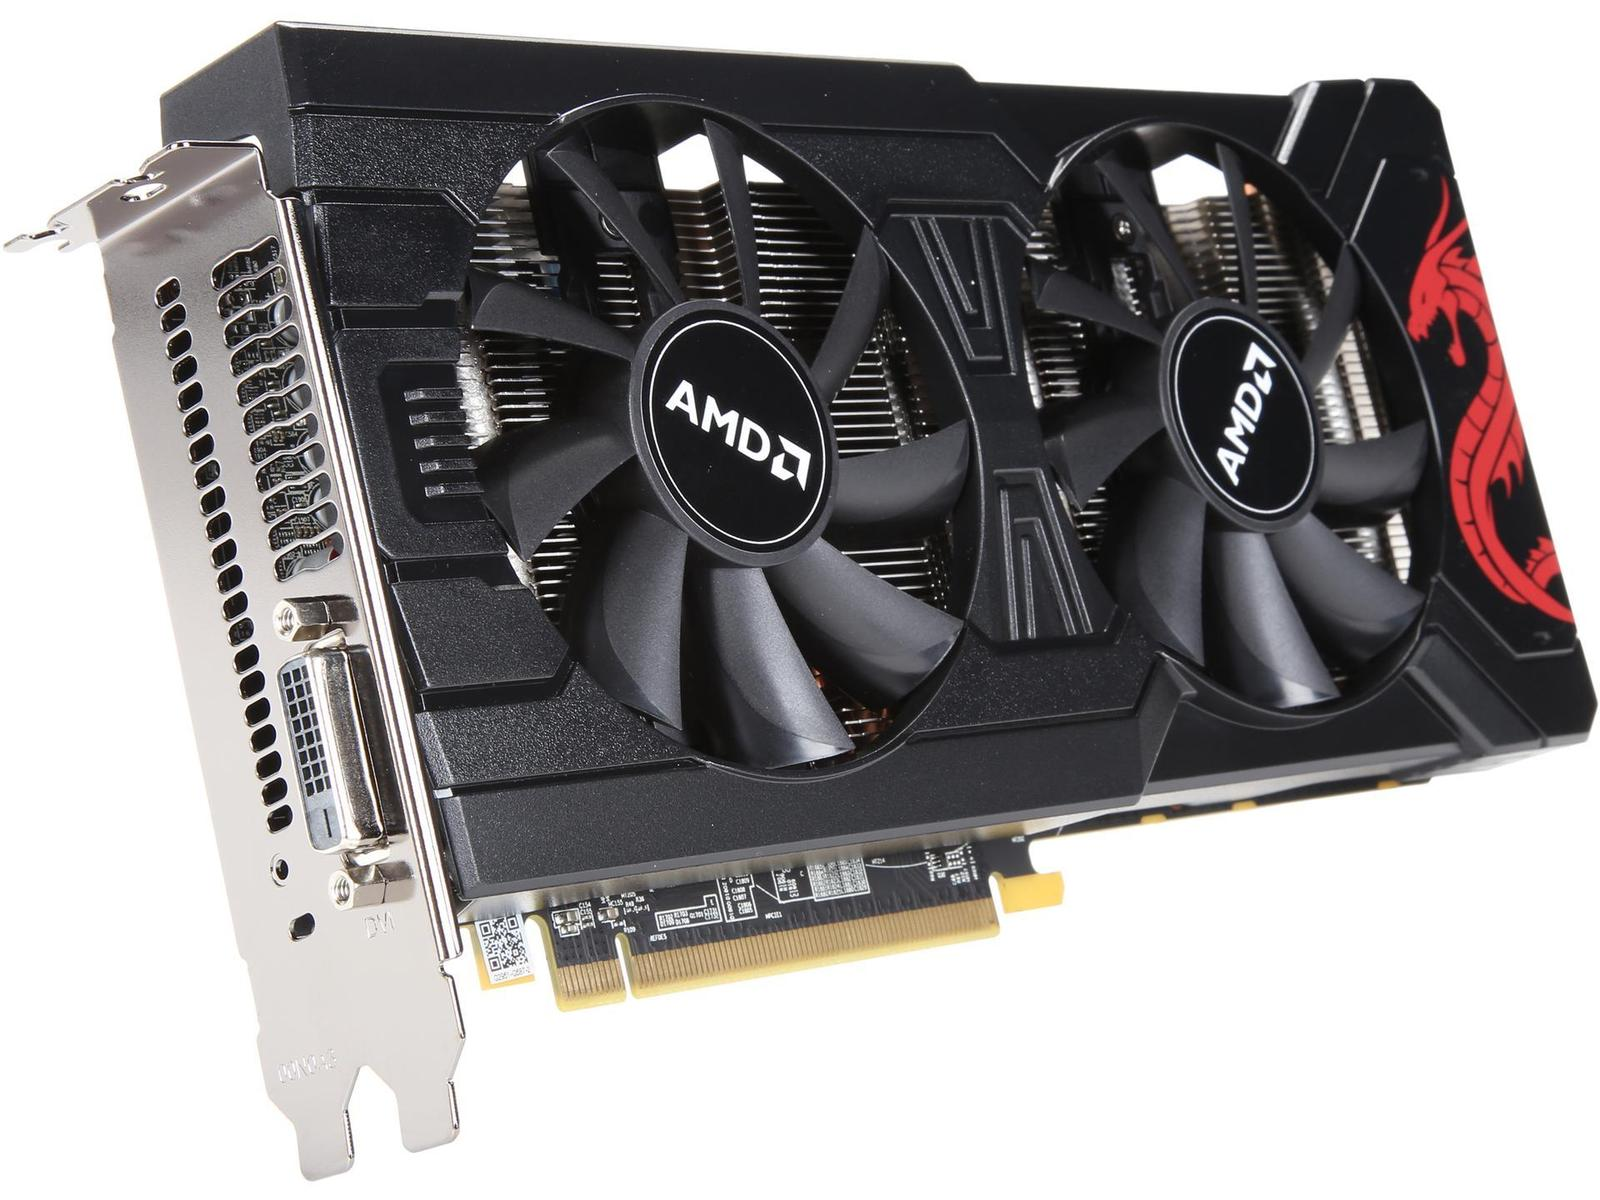 Amd rx 570 series. AMD Radeon RX 570 8gb. Видеокарта RX 570 8gb. AMD RX 570 4gb. POWERCOLOR RX 570 8gb.